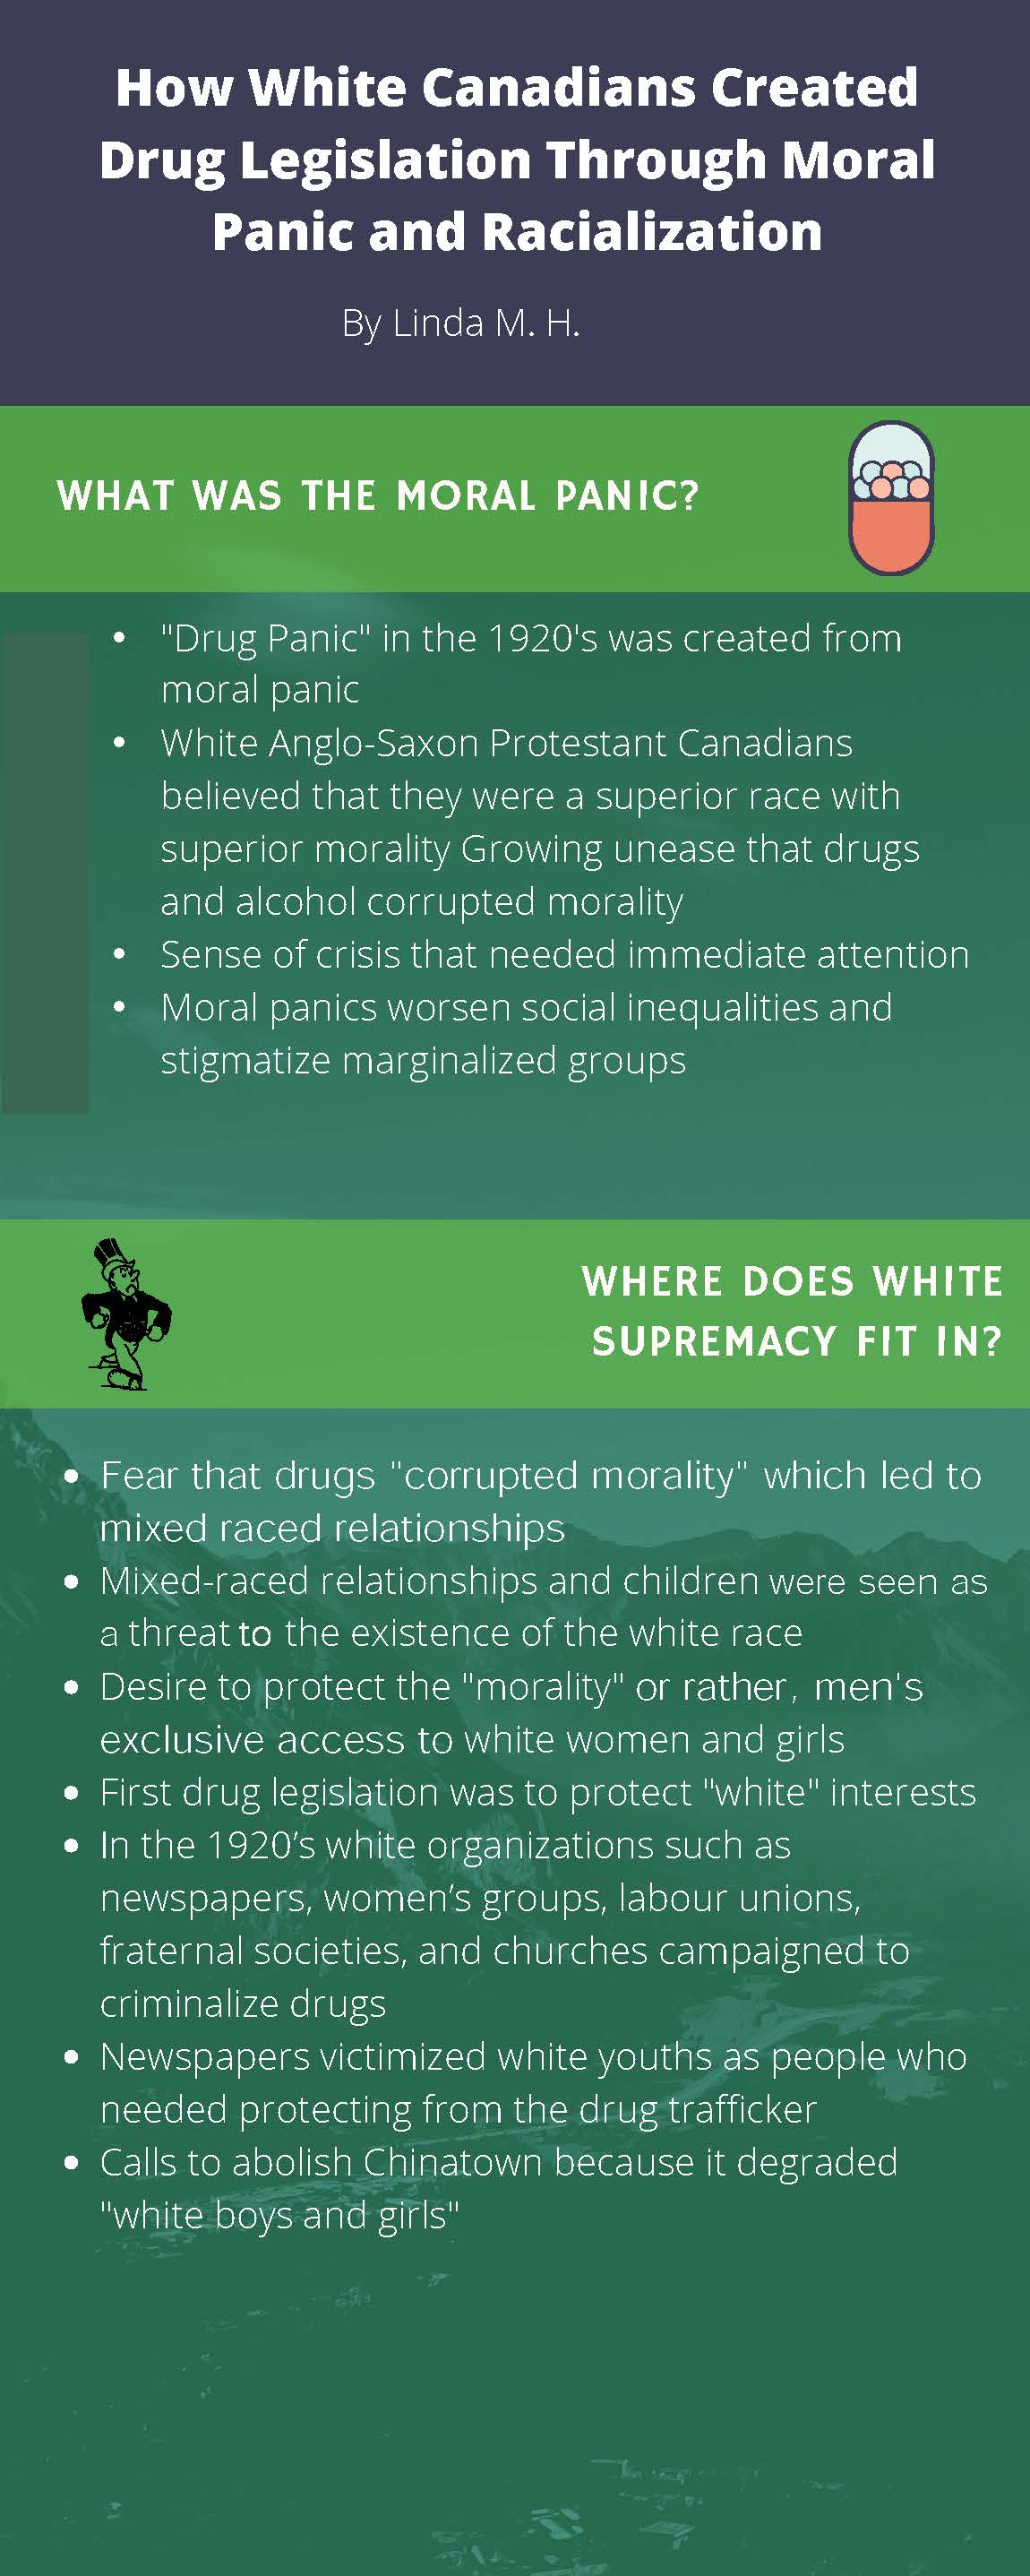 How-white-canadians-created-drug-legislation.-L.M.H._Page_1.jpg